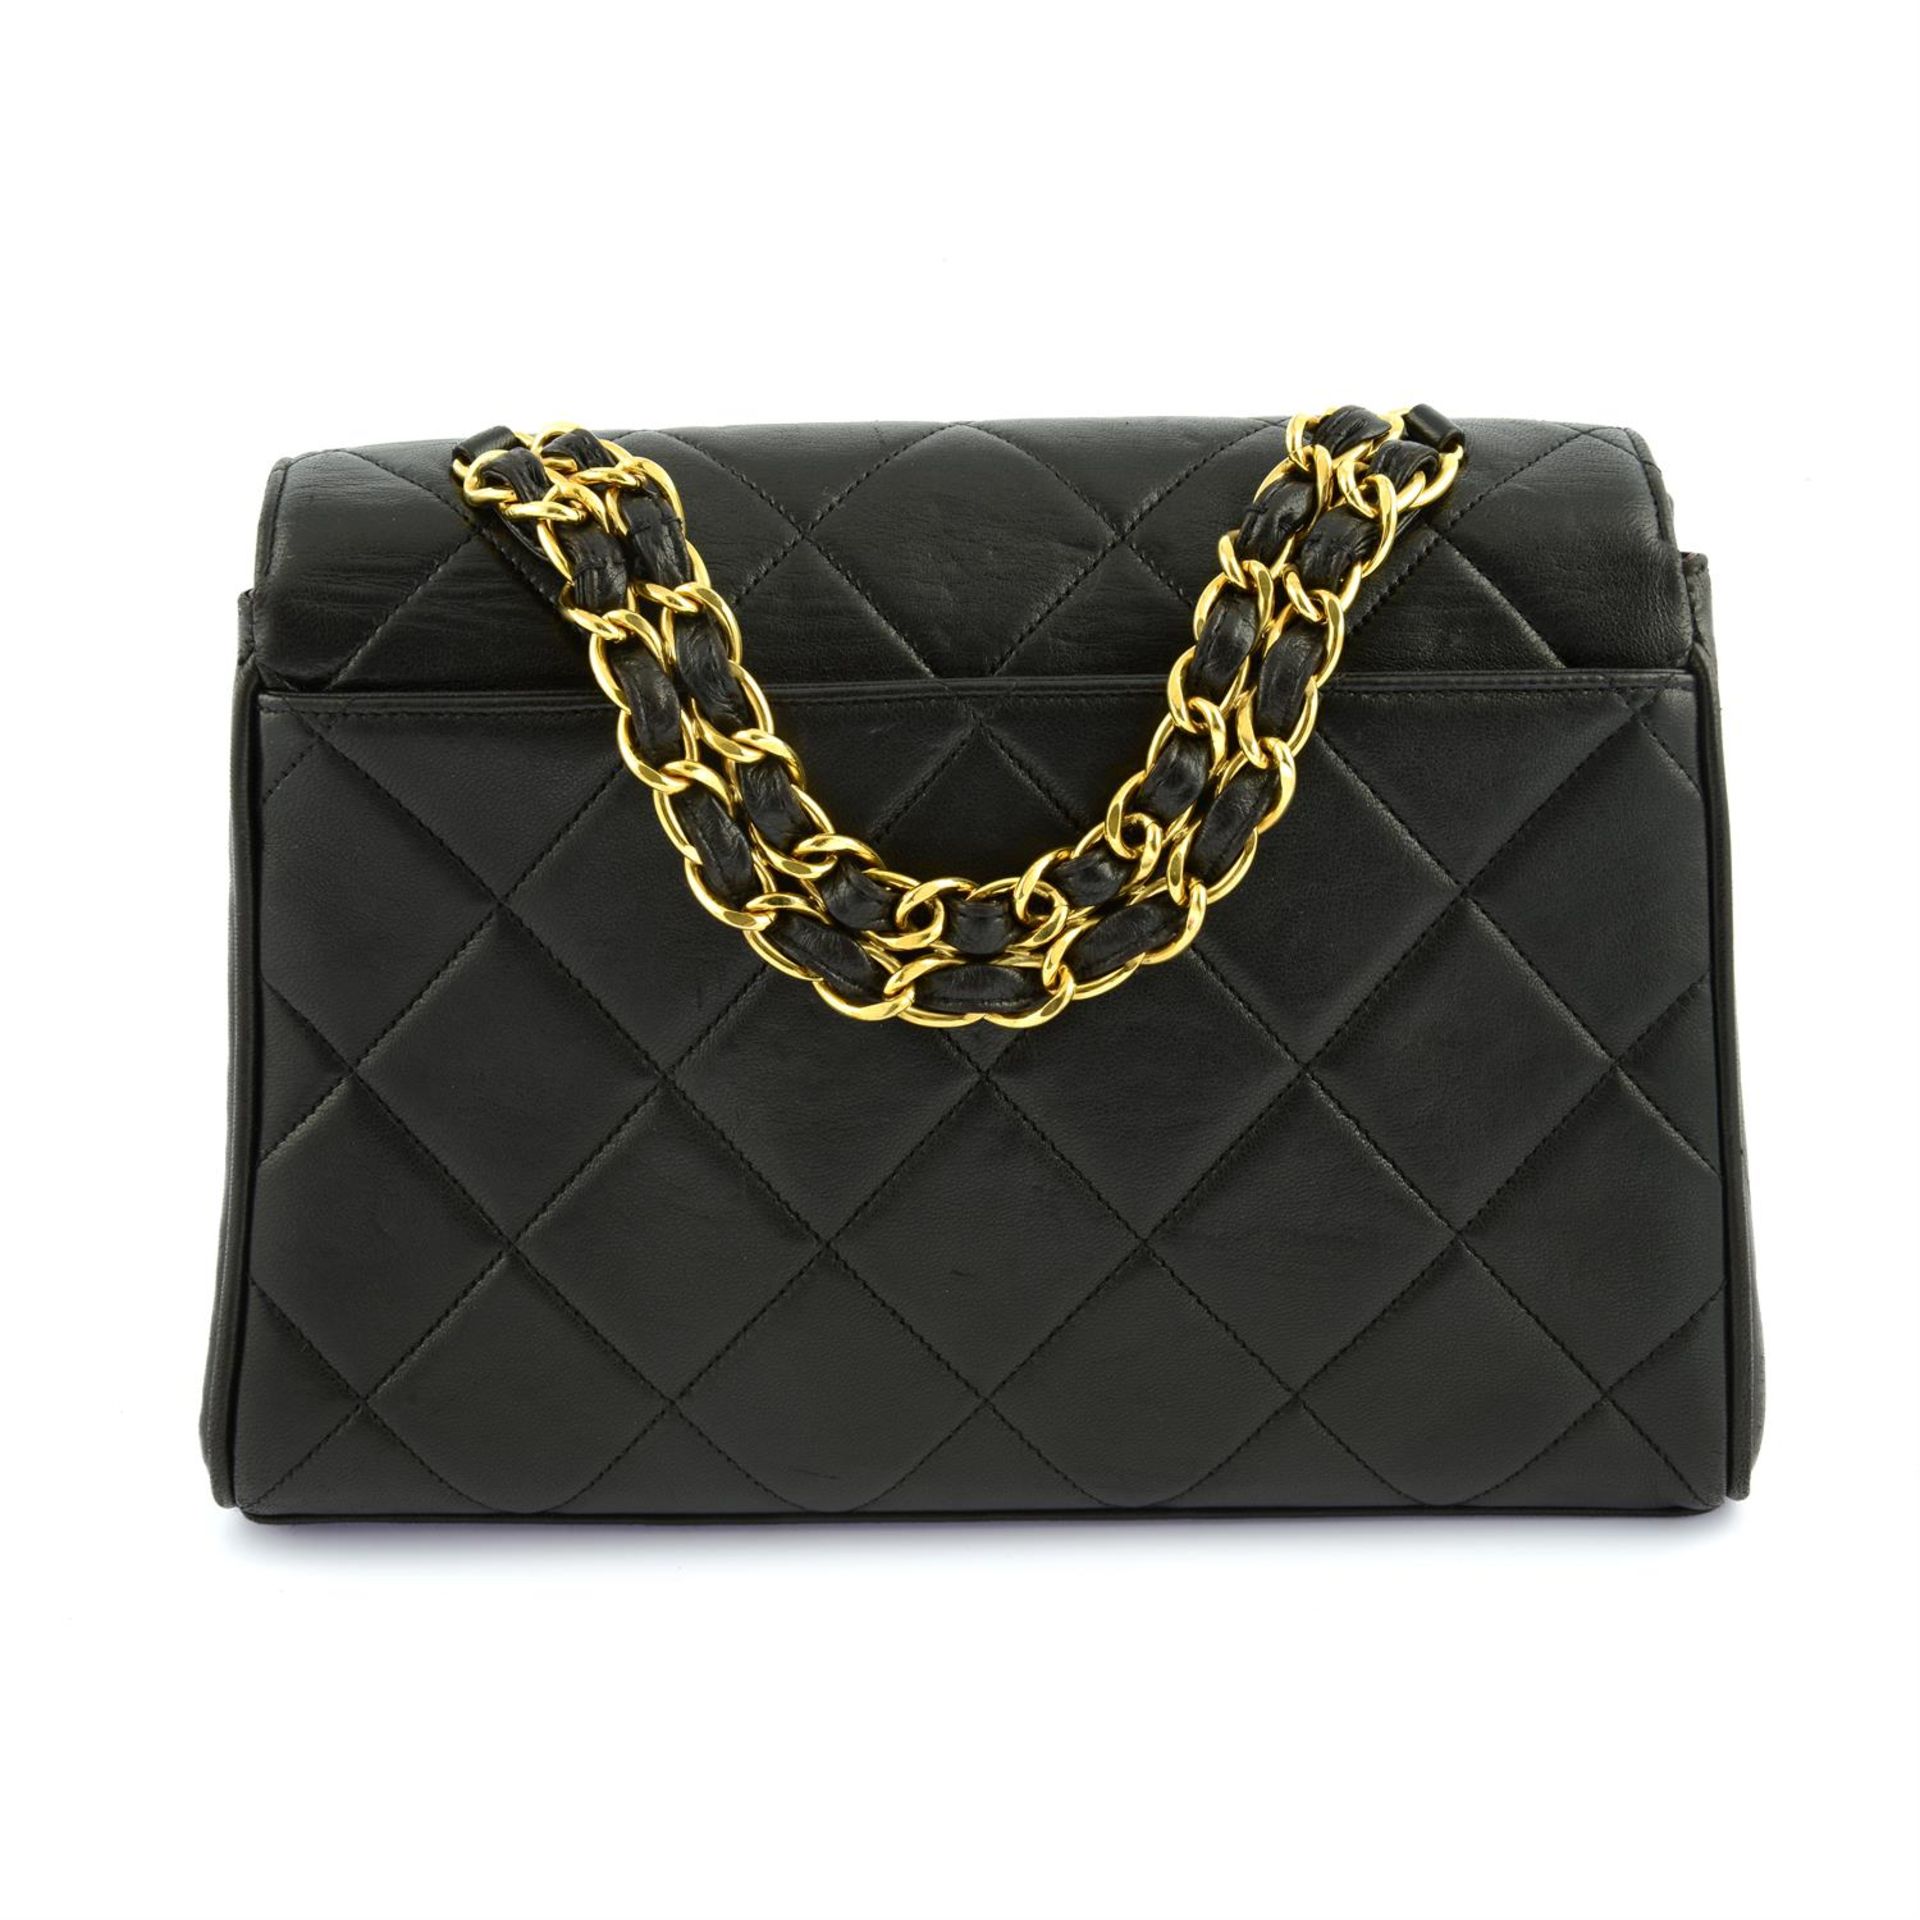 CHANEL - a black lambskin leather top handle single flap handbag. - Image 2 of 5